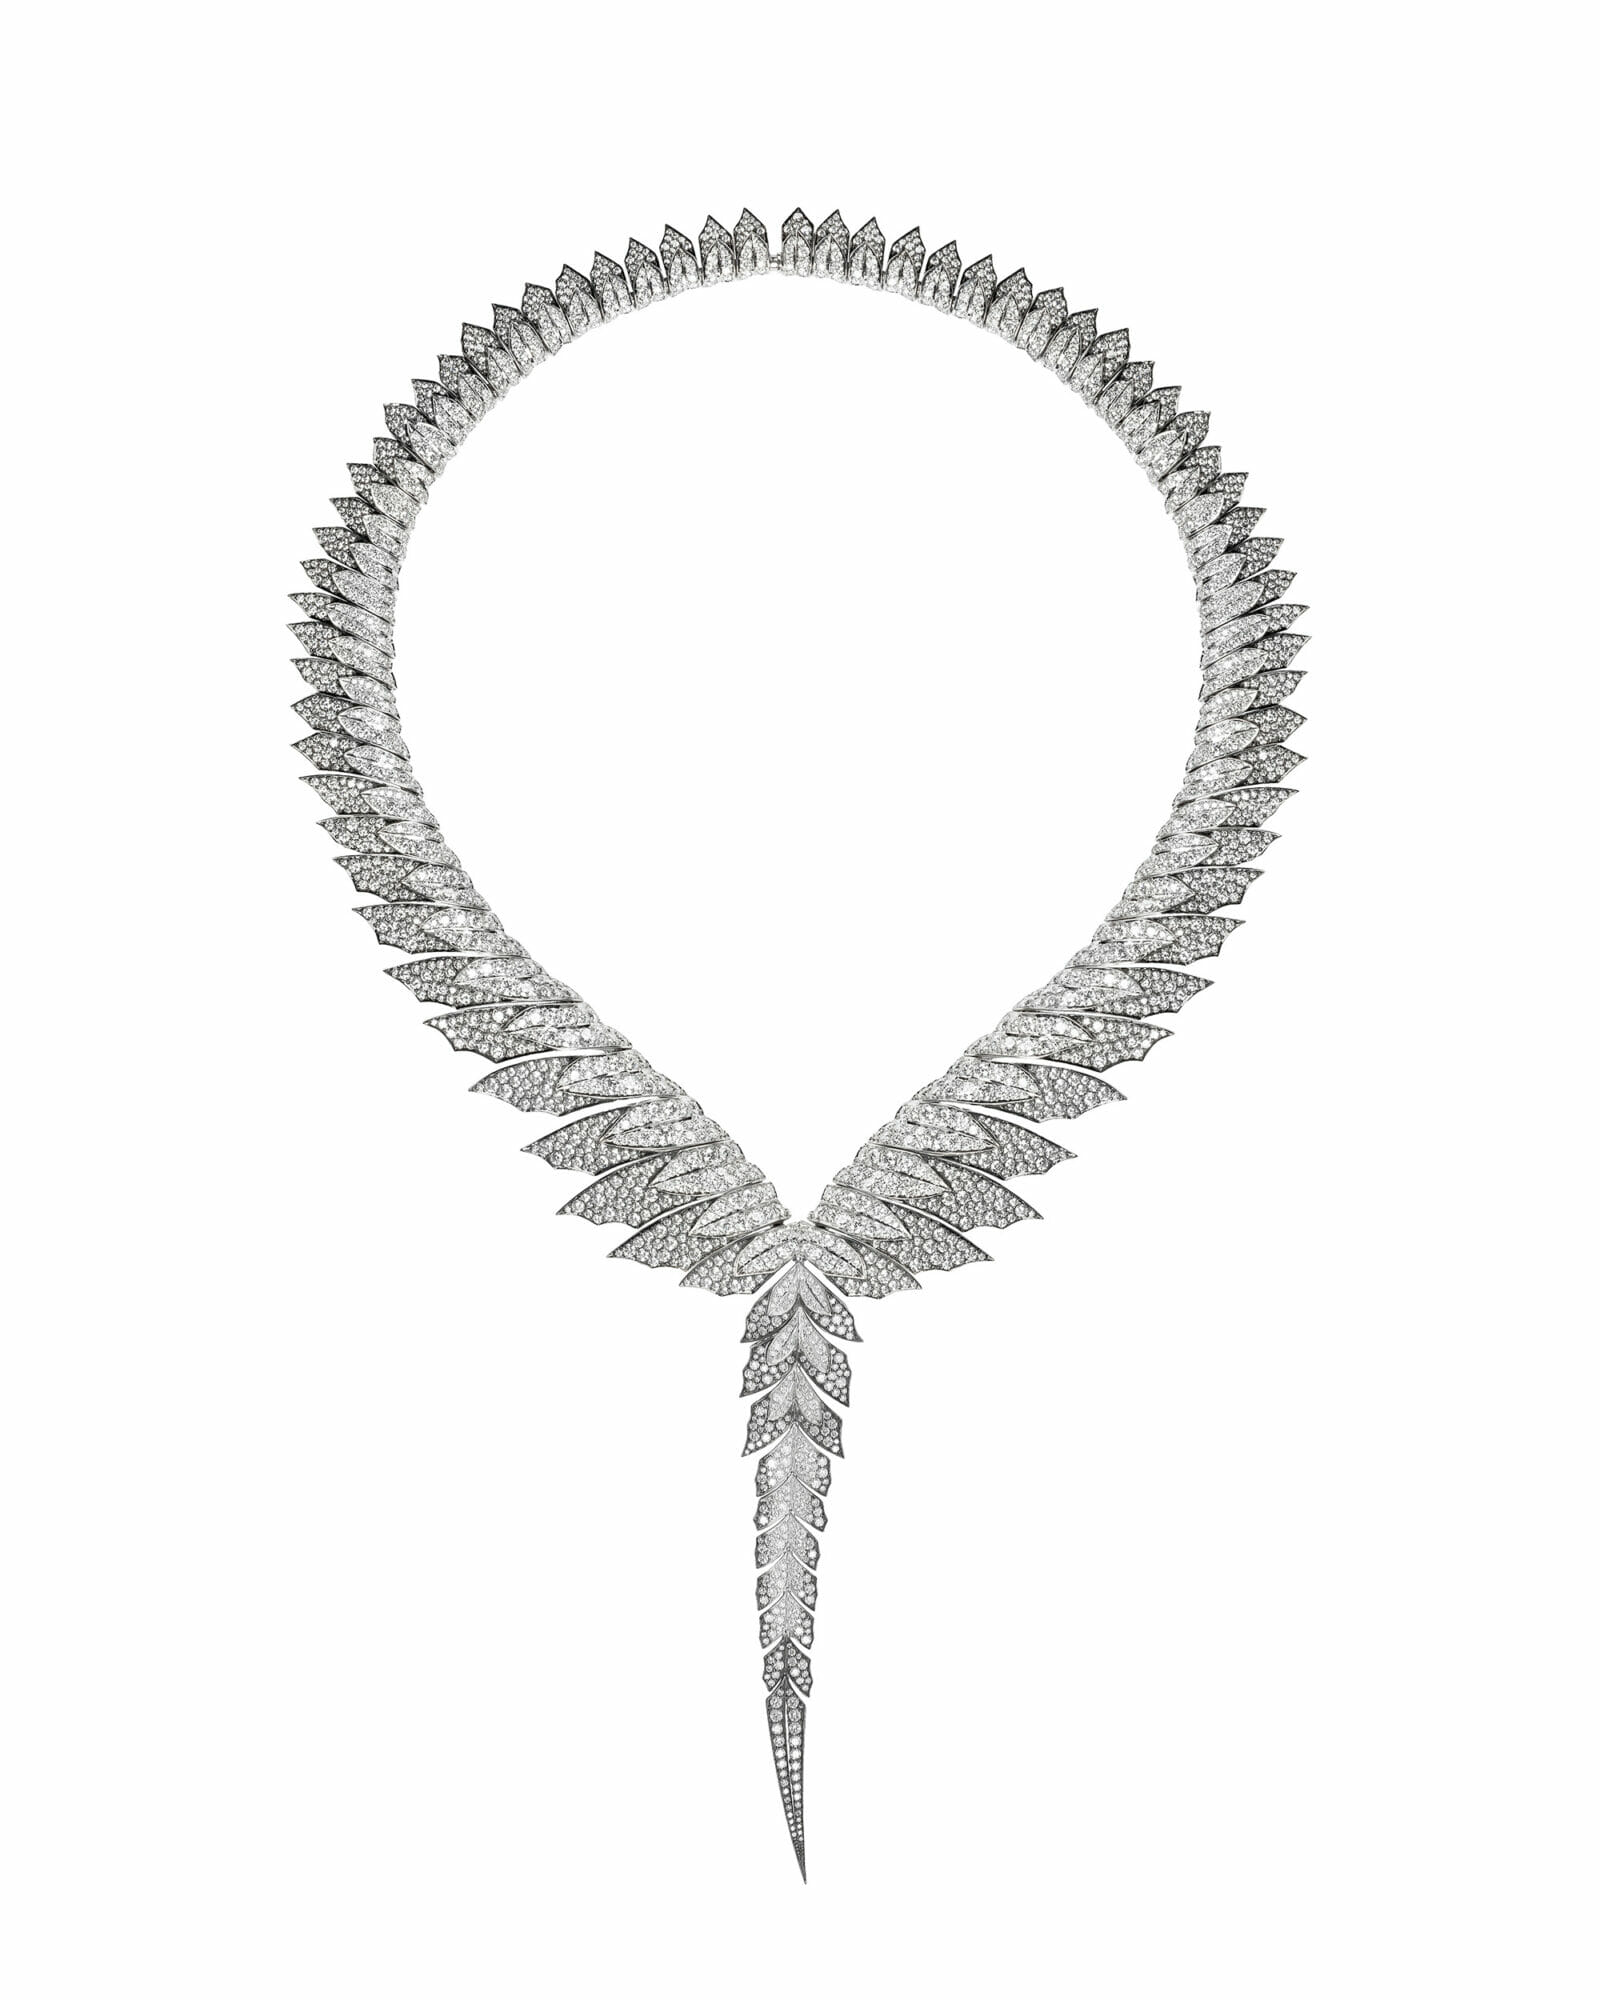 stephen webster works british jewelry designers diamonds necklace